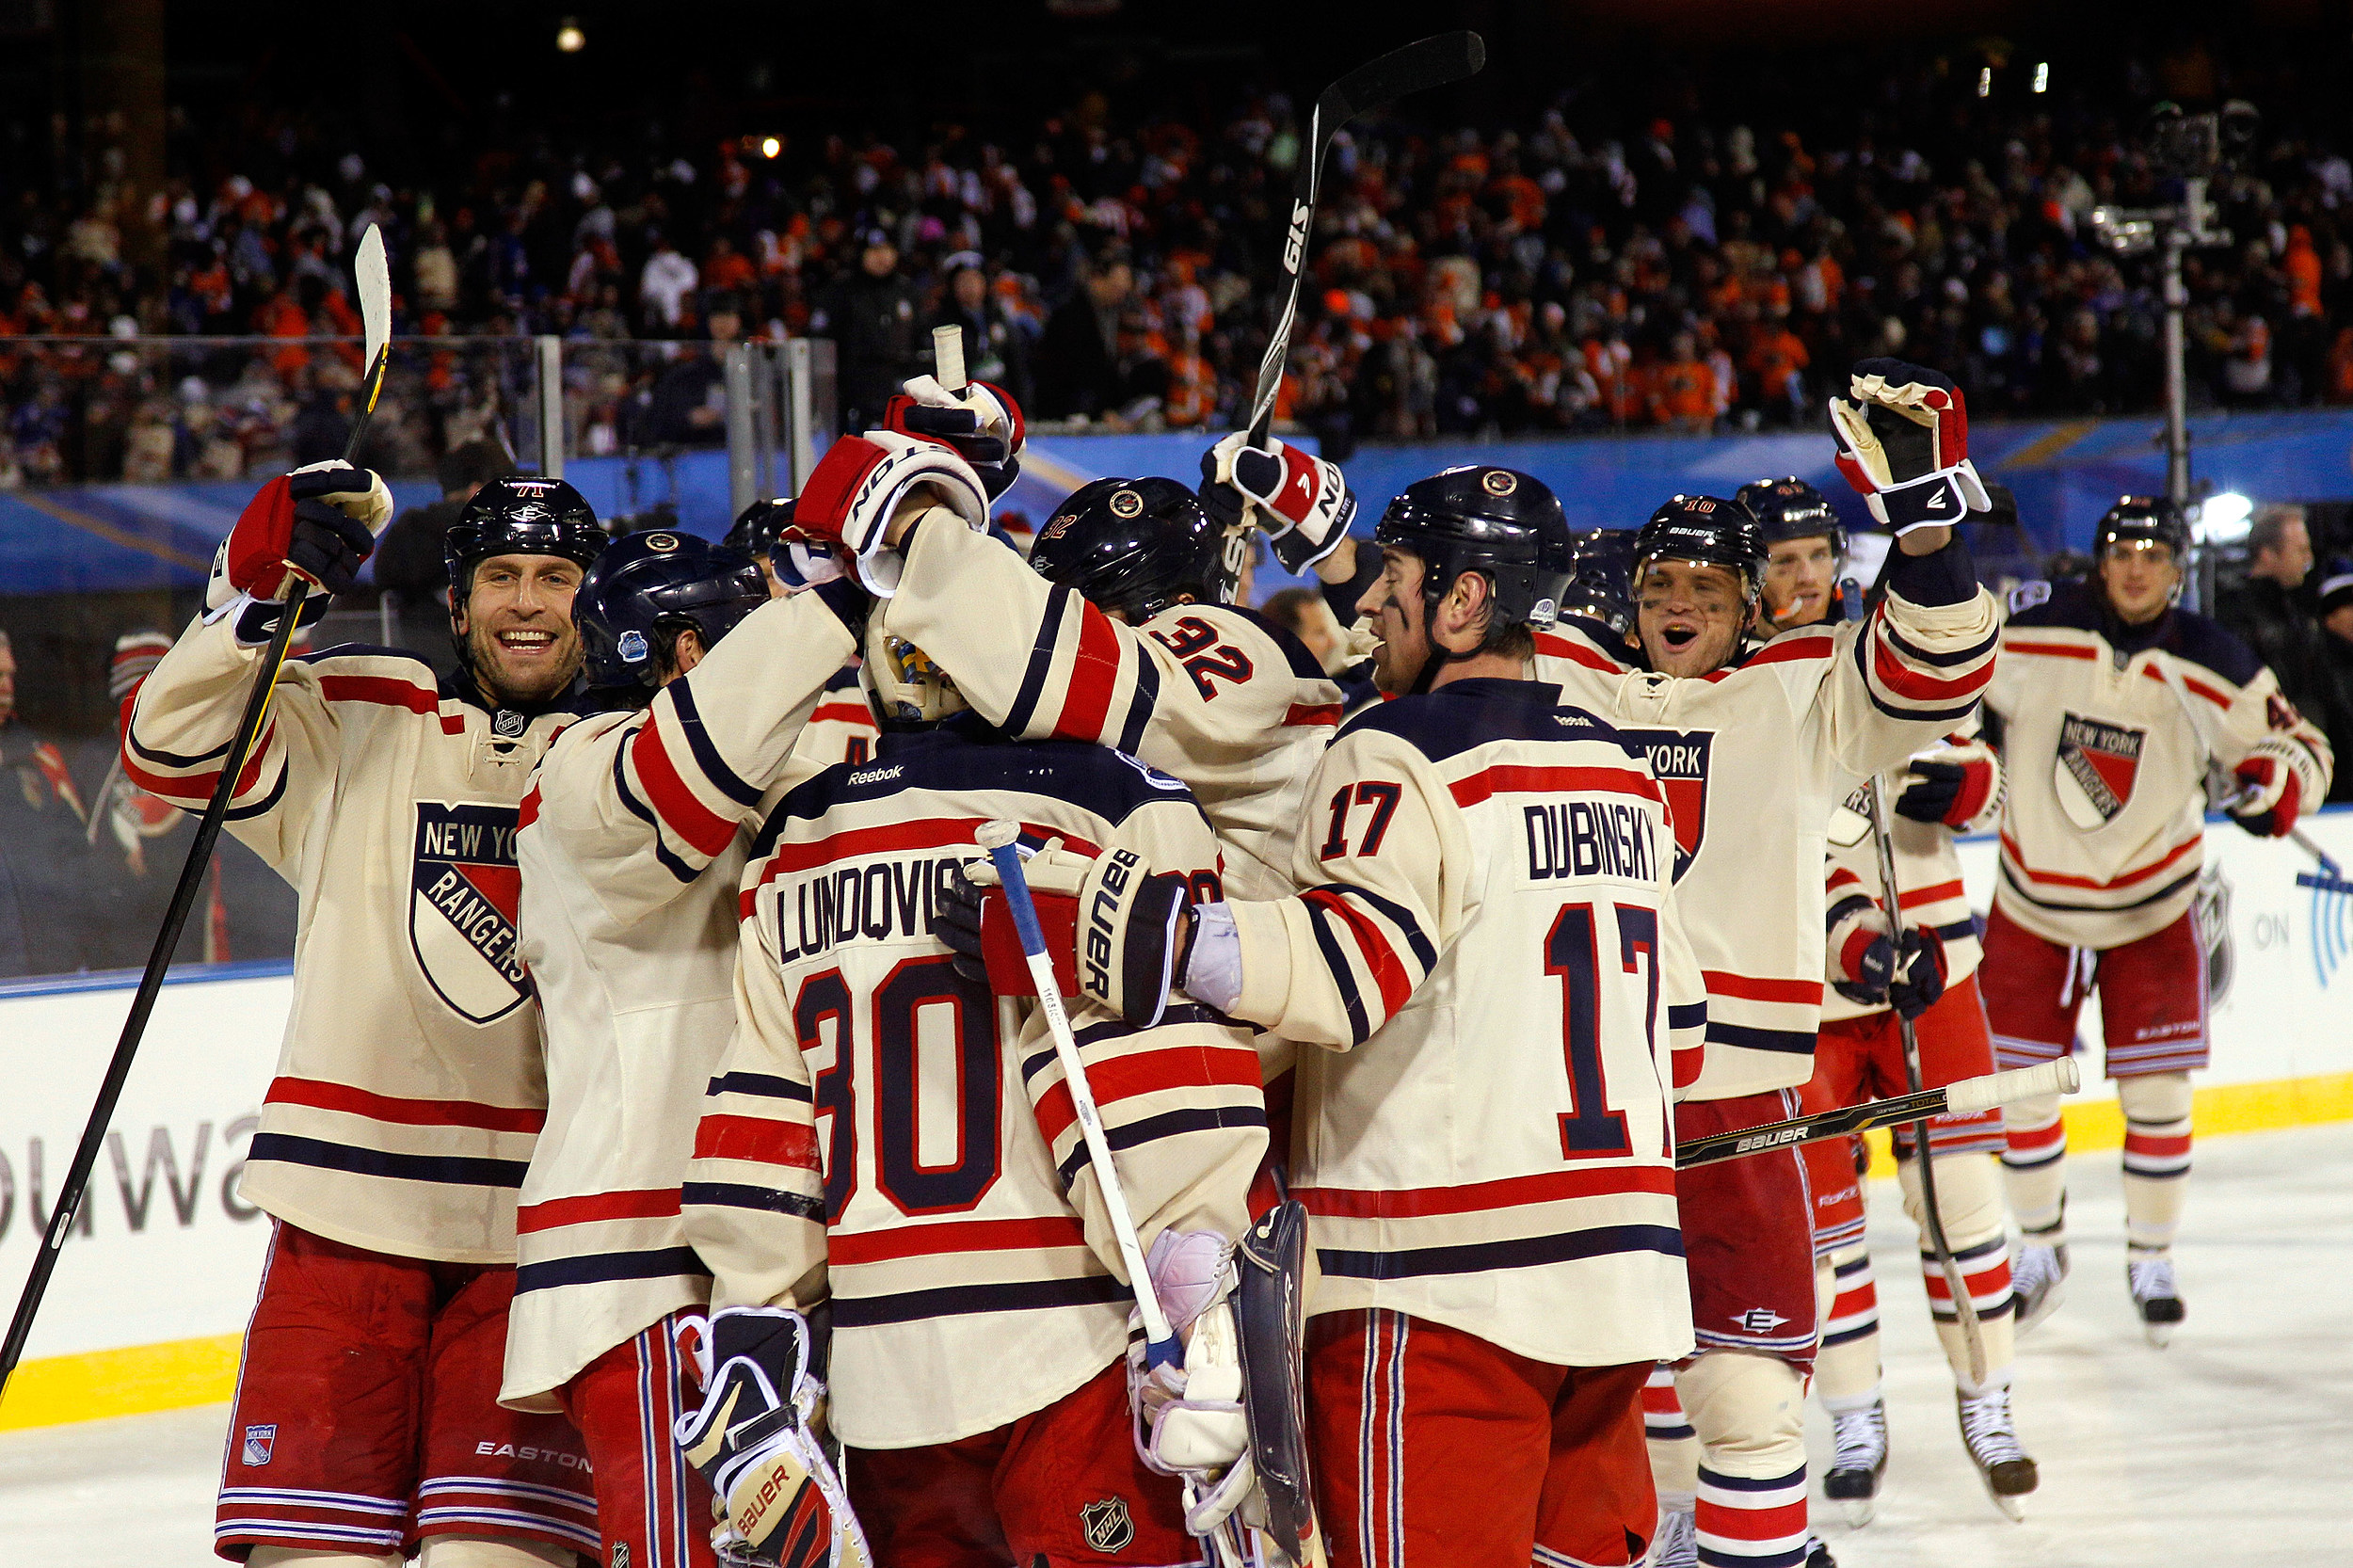 2012 NHL Winter Classic - Flyers Vs. Rangers